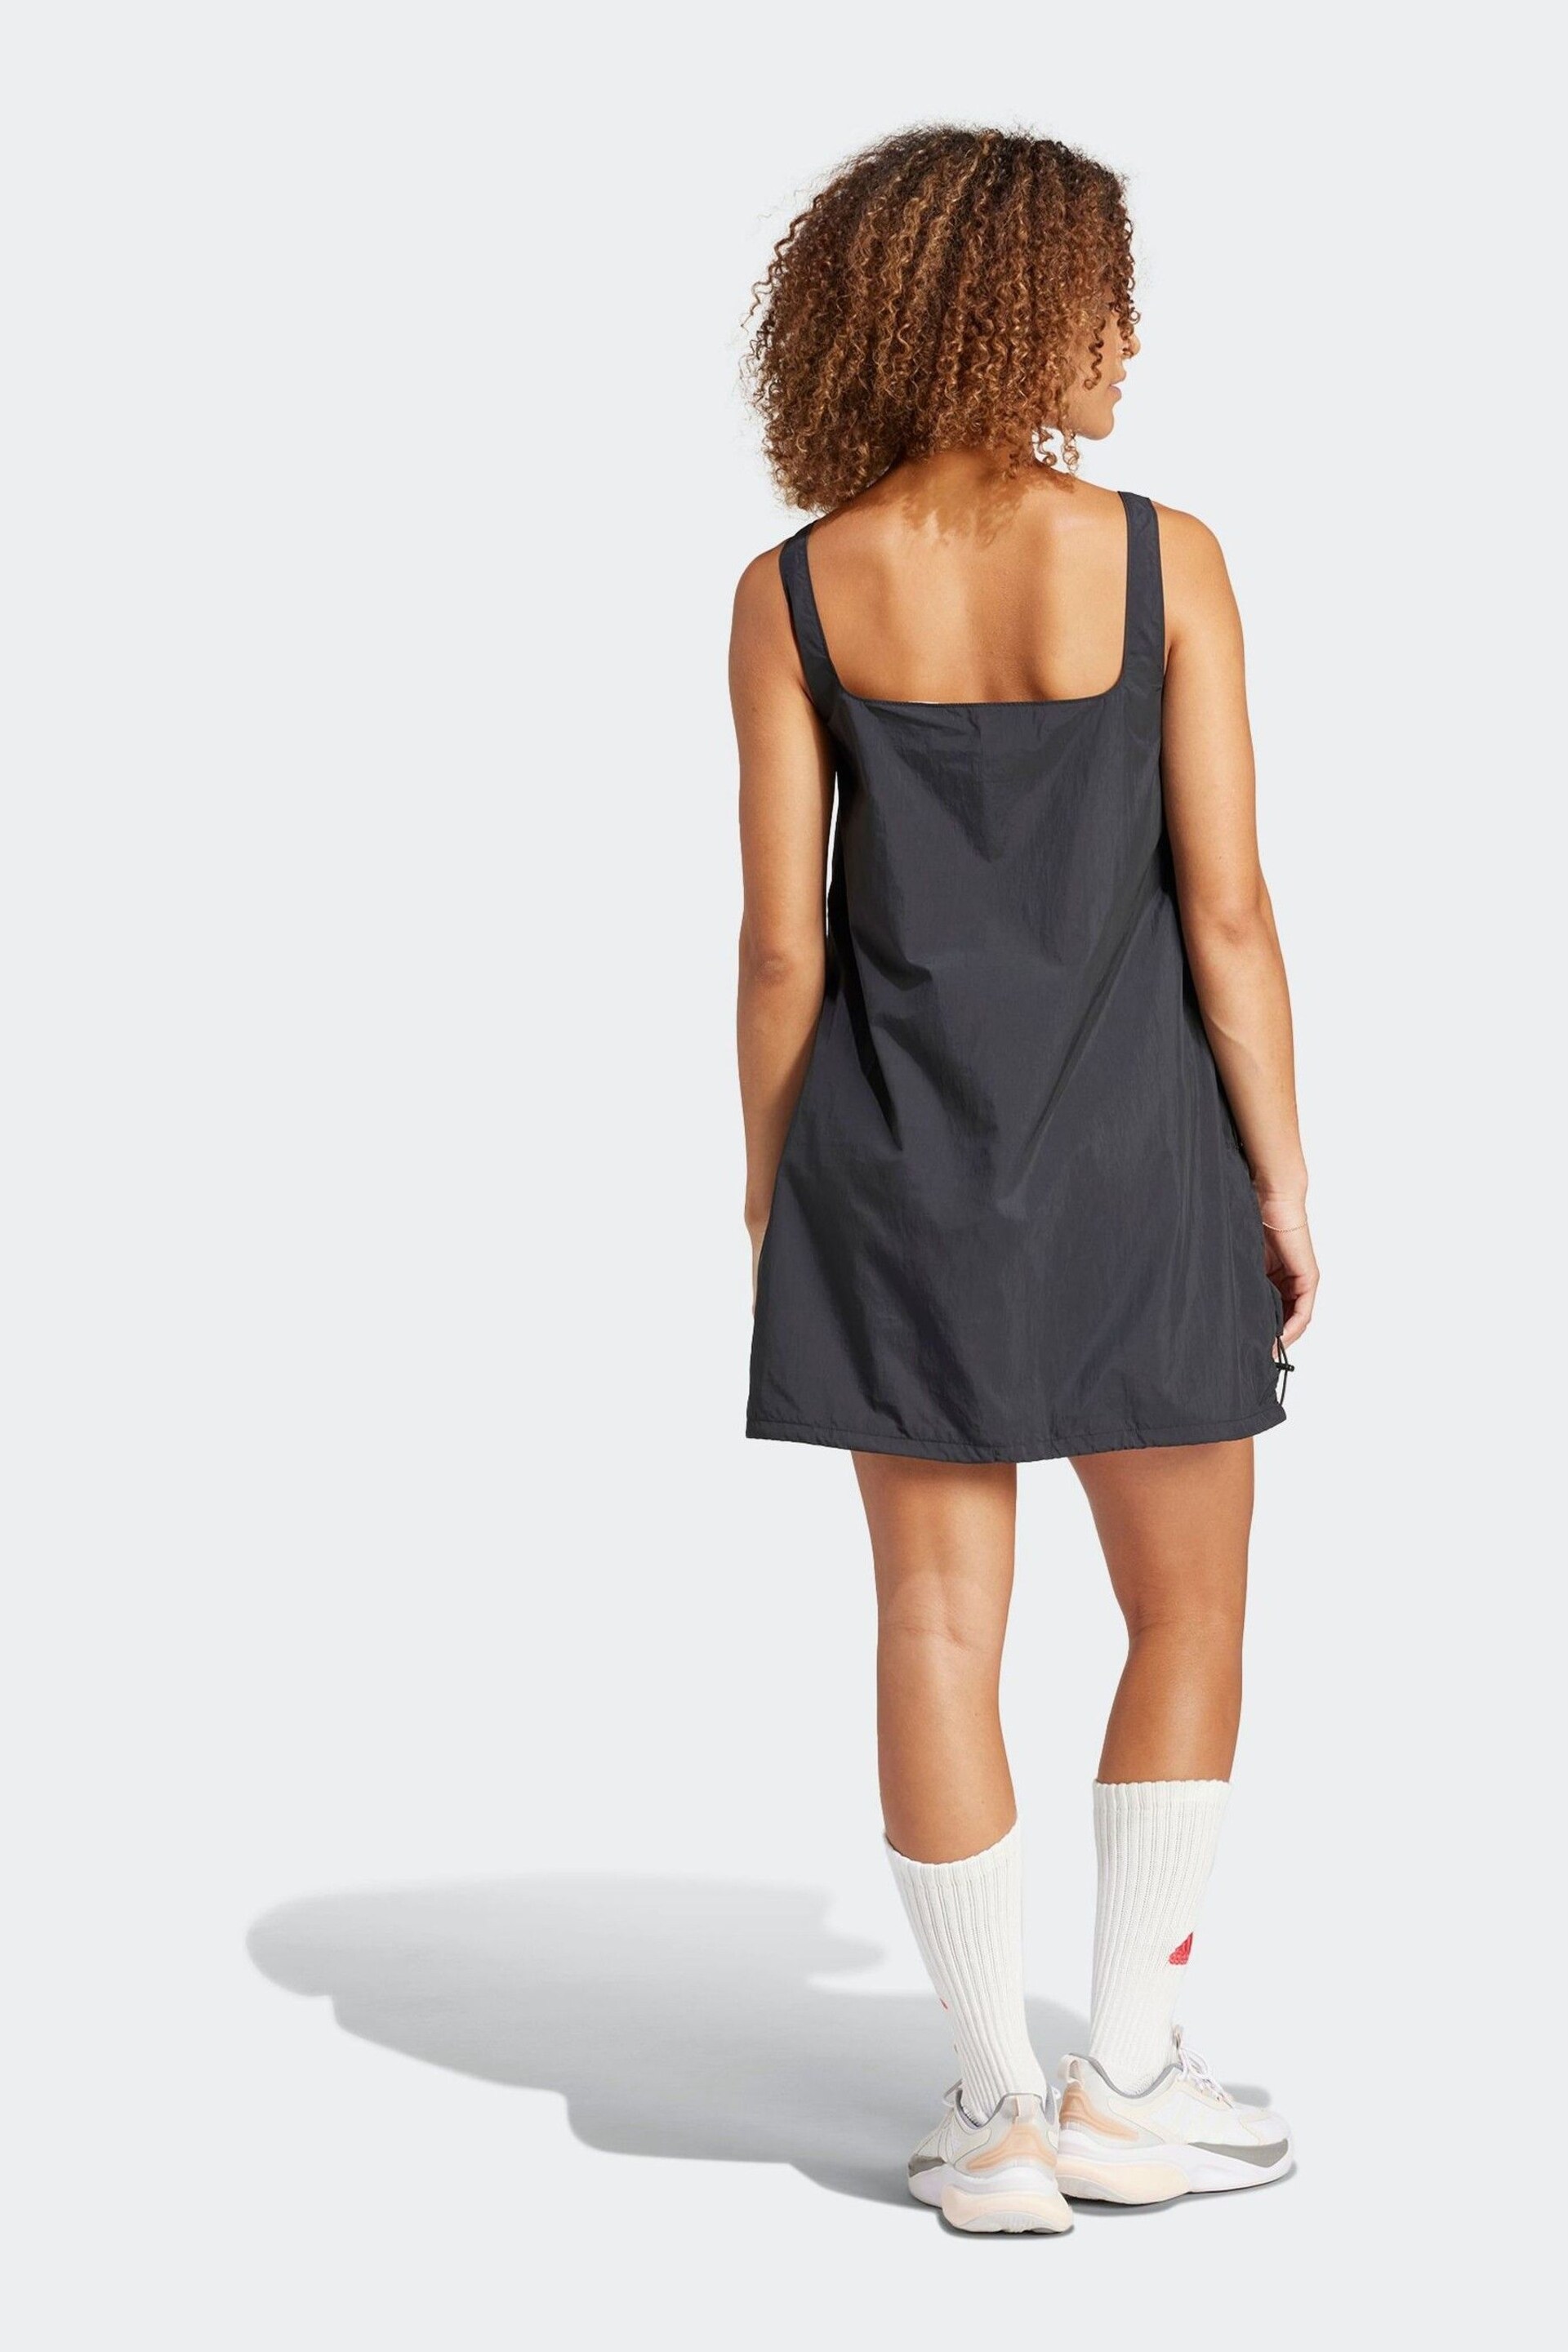 adidas Black Sportswear City Escape Summer Dress - Image 3 of 6